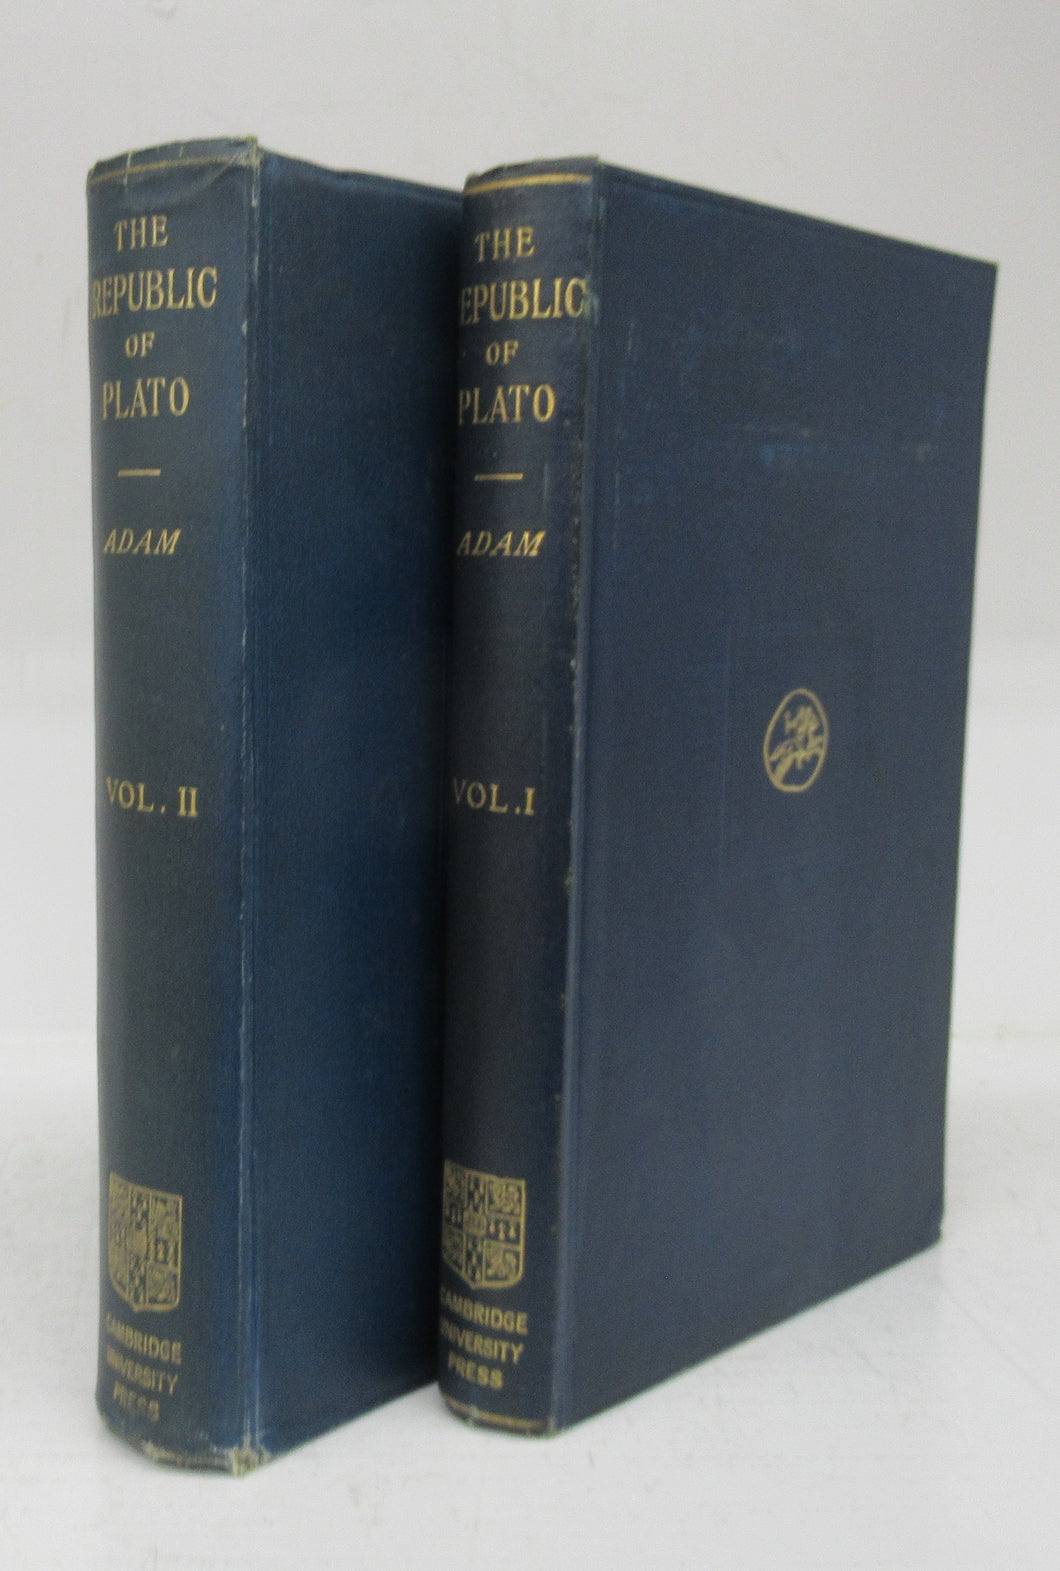 The Republic of Plato, Volume I, Books I-V. Volume II, Books VI-X and Indexes